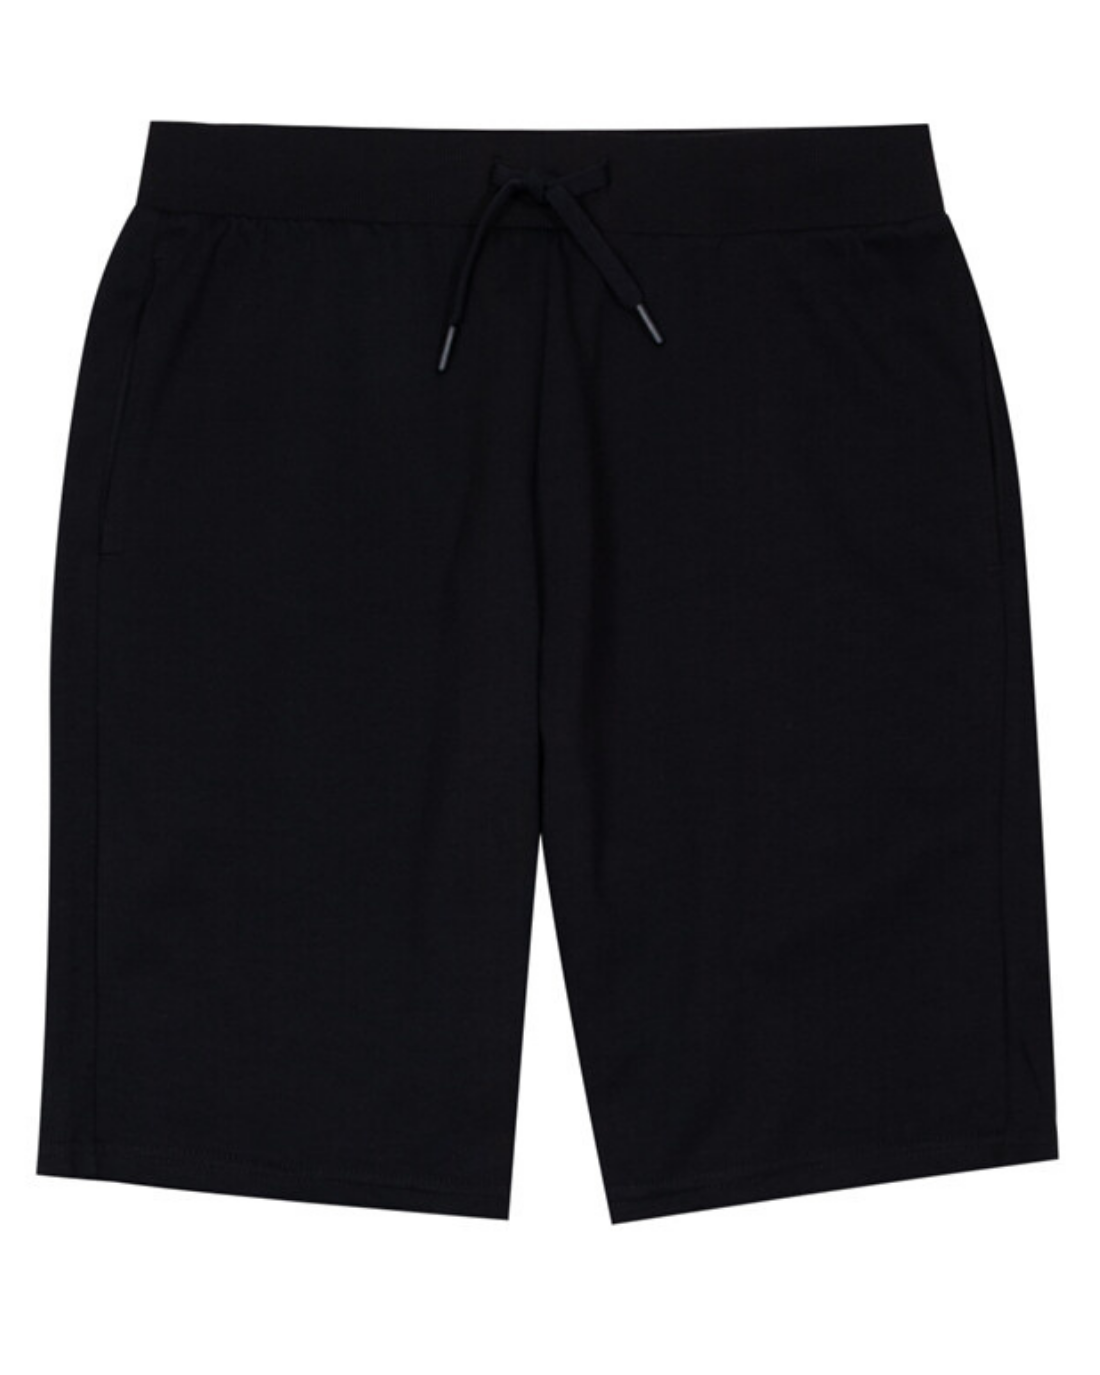 Double Knit Drawstring Shorts 19 Signature Black - Giordano South